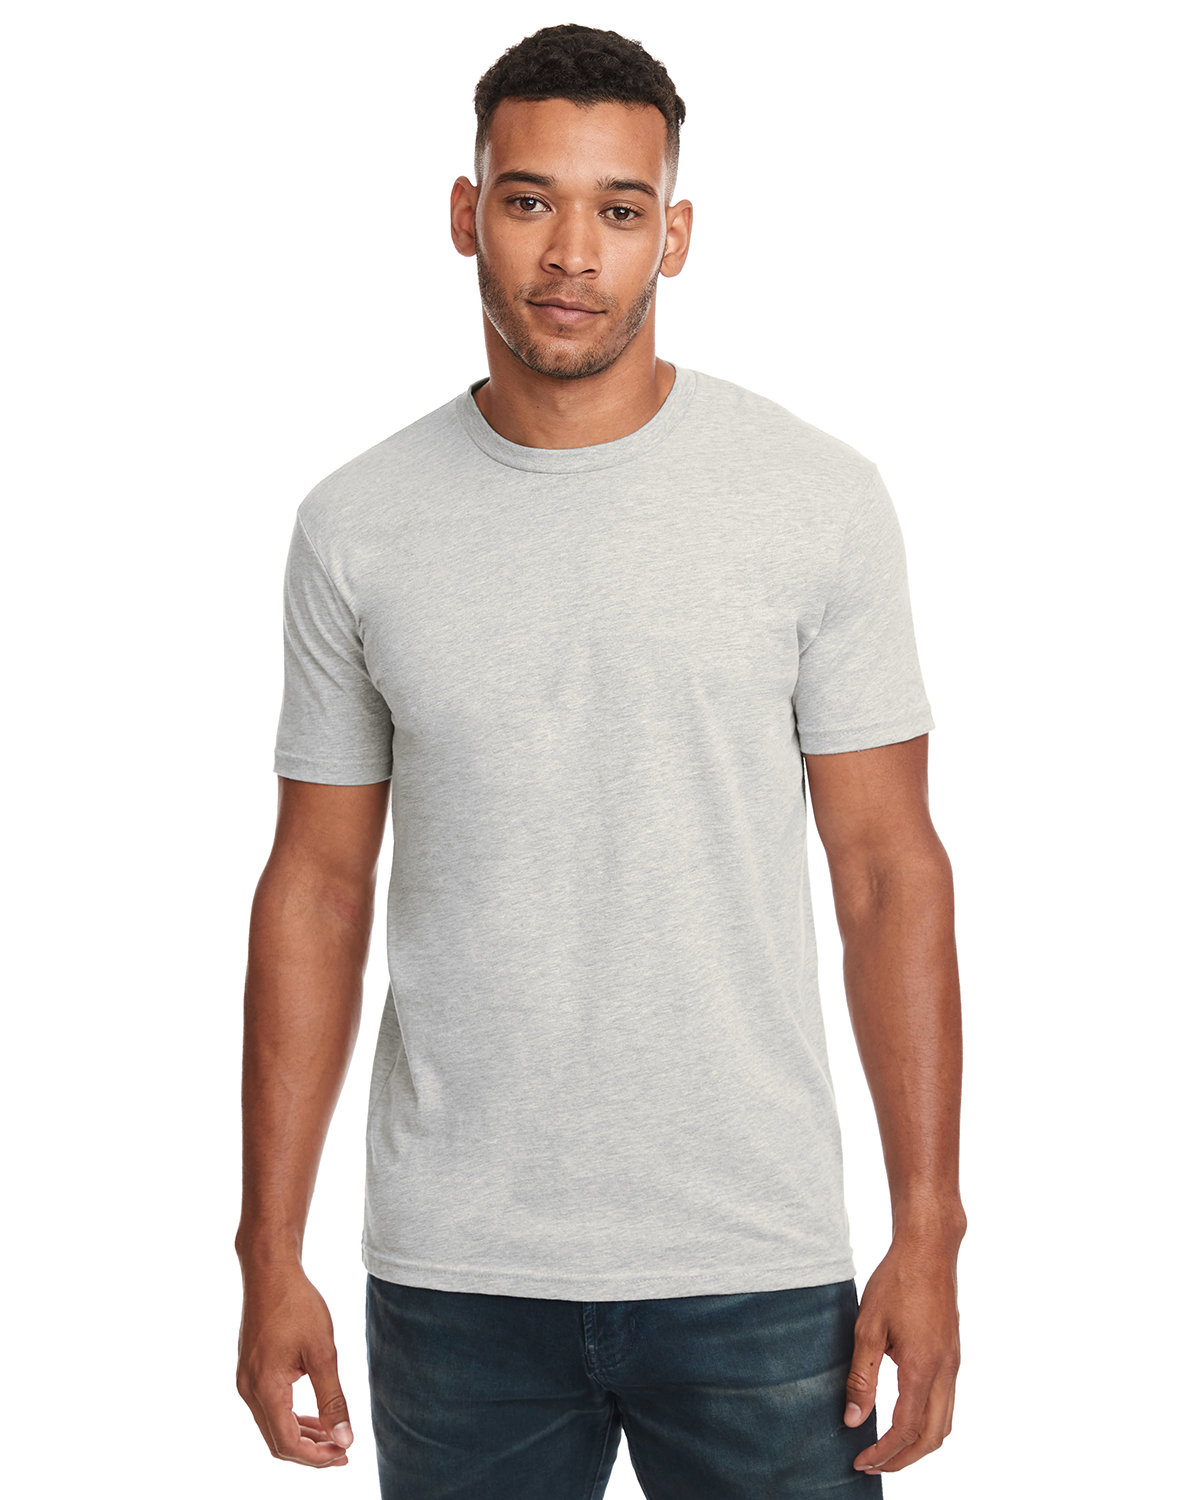 Next Level 3600 Oatmeal Unisex Cotton T-Shirt | JiffyShirts